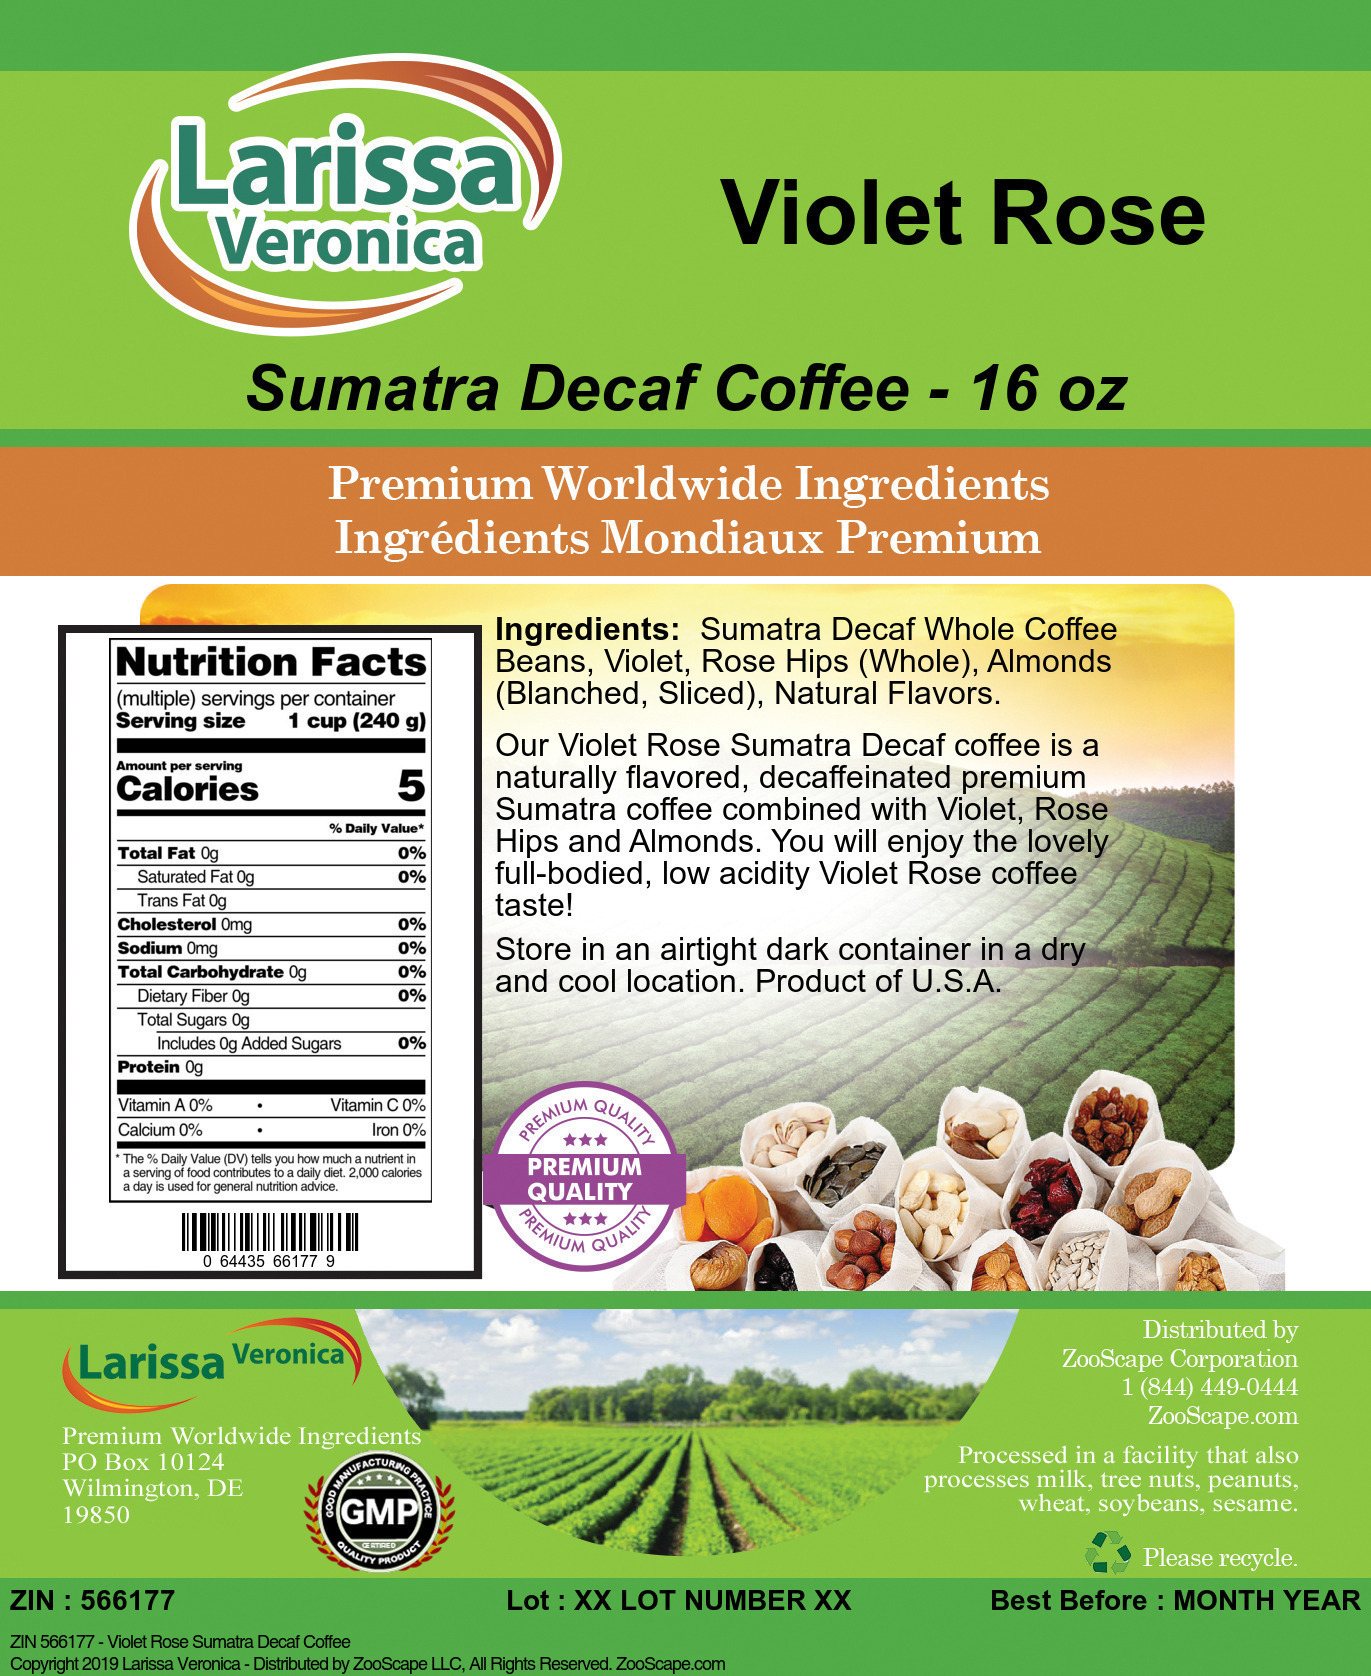 Violet Rose Sumatra Decaf Coffee - Label